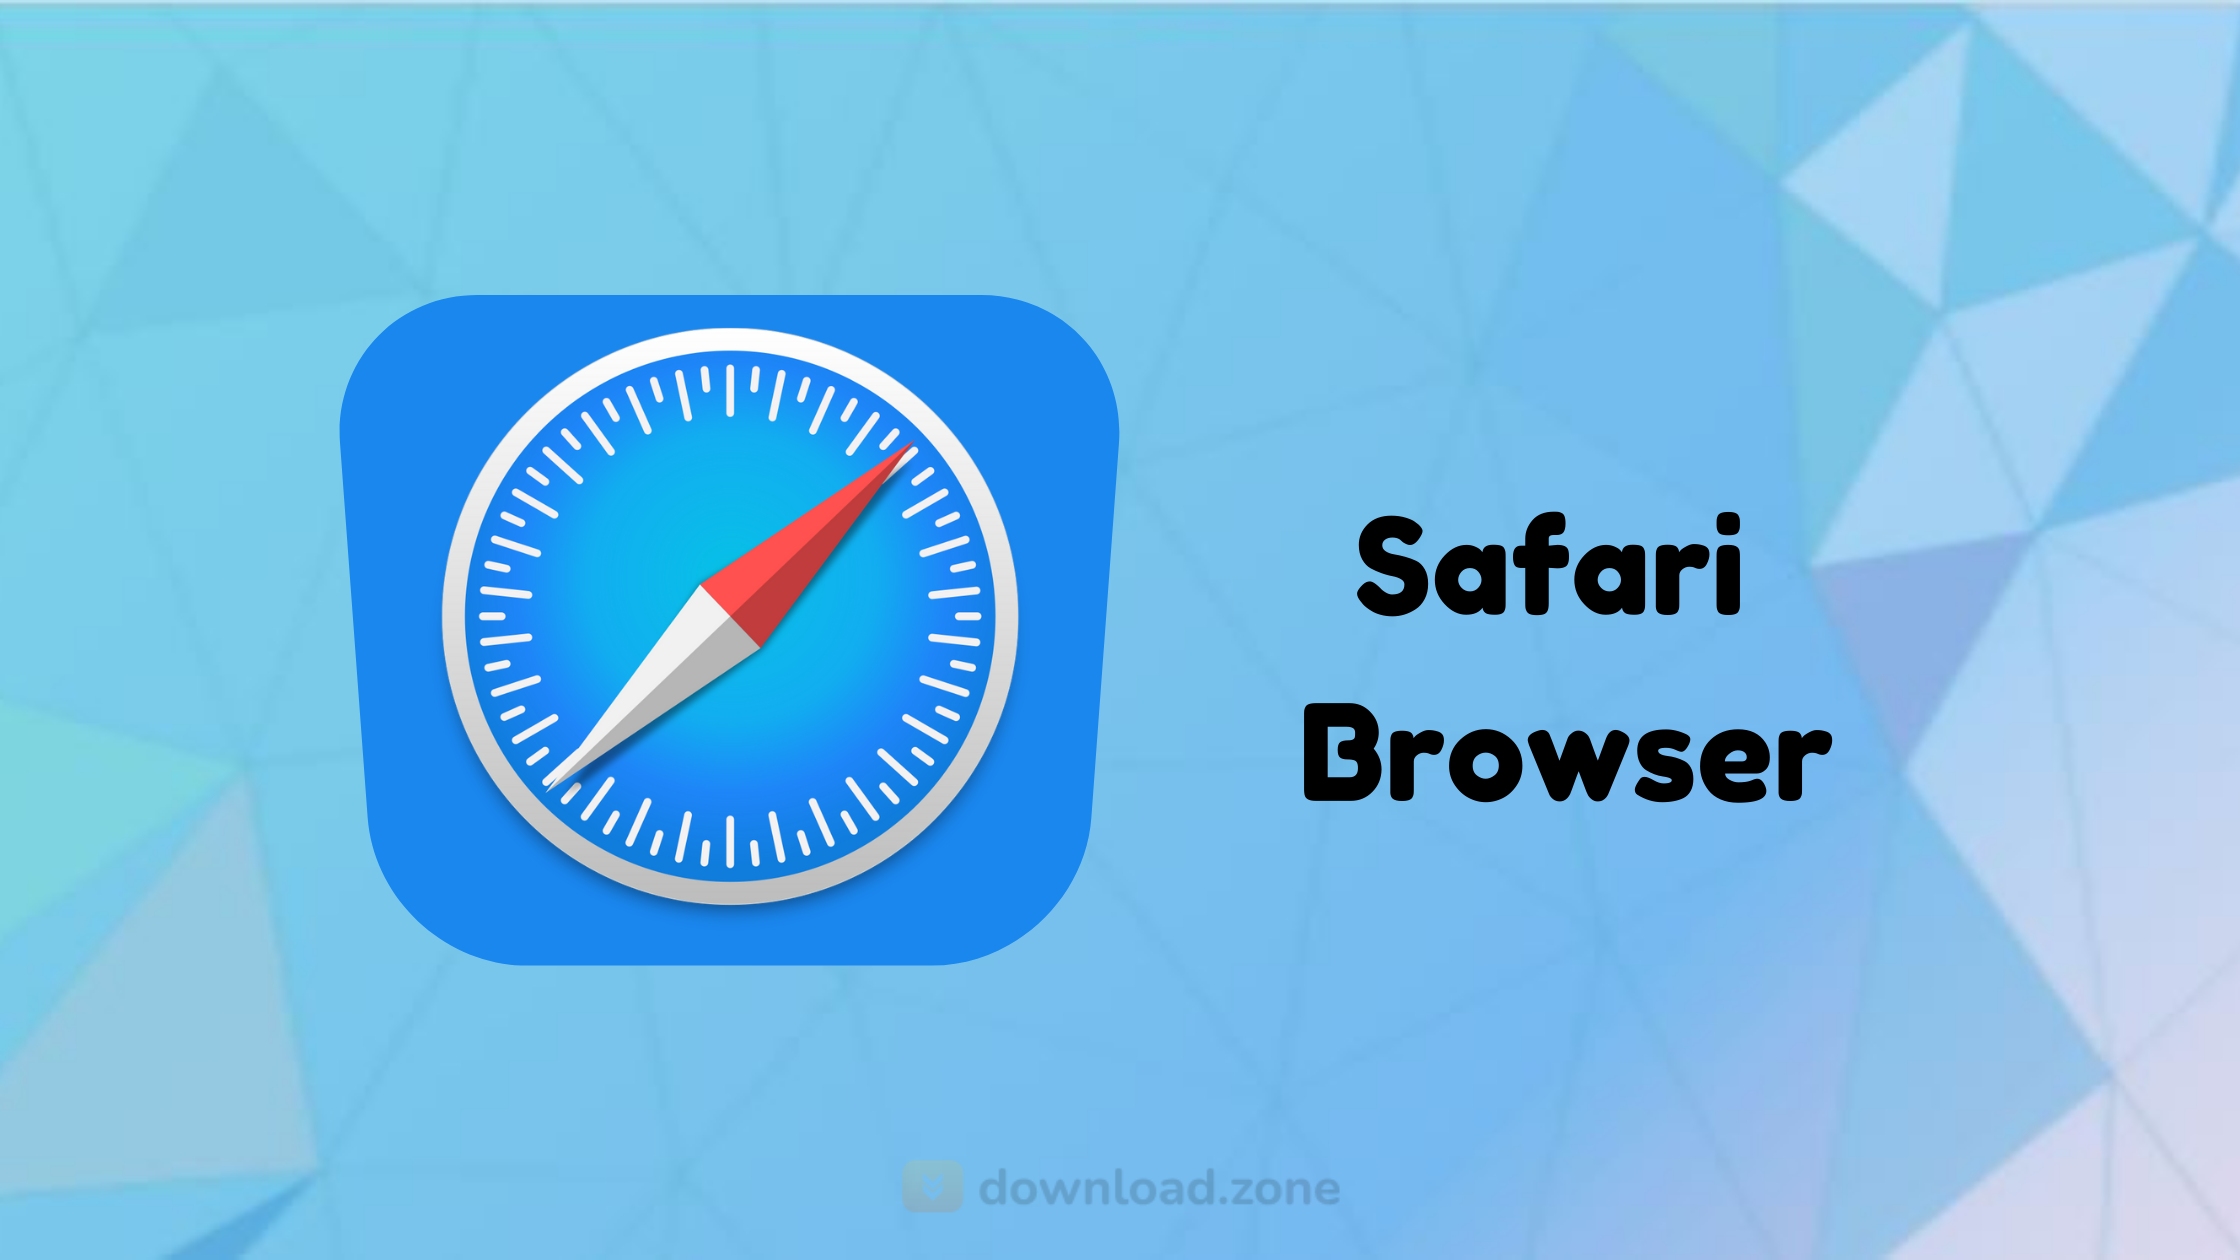 Apple Safari browser crosses the 1 billion user mark